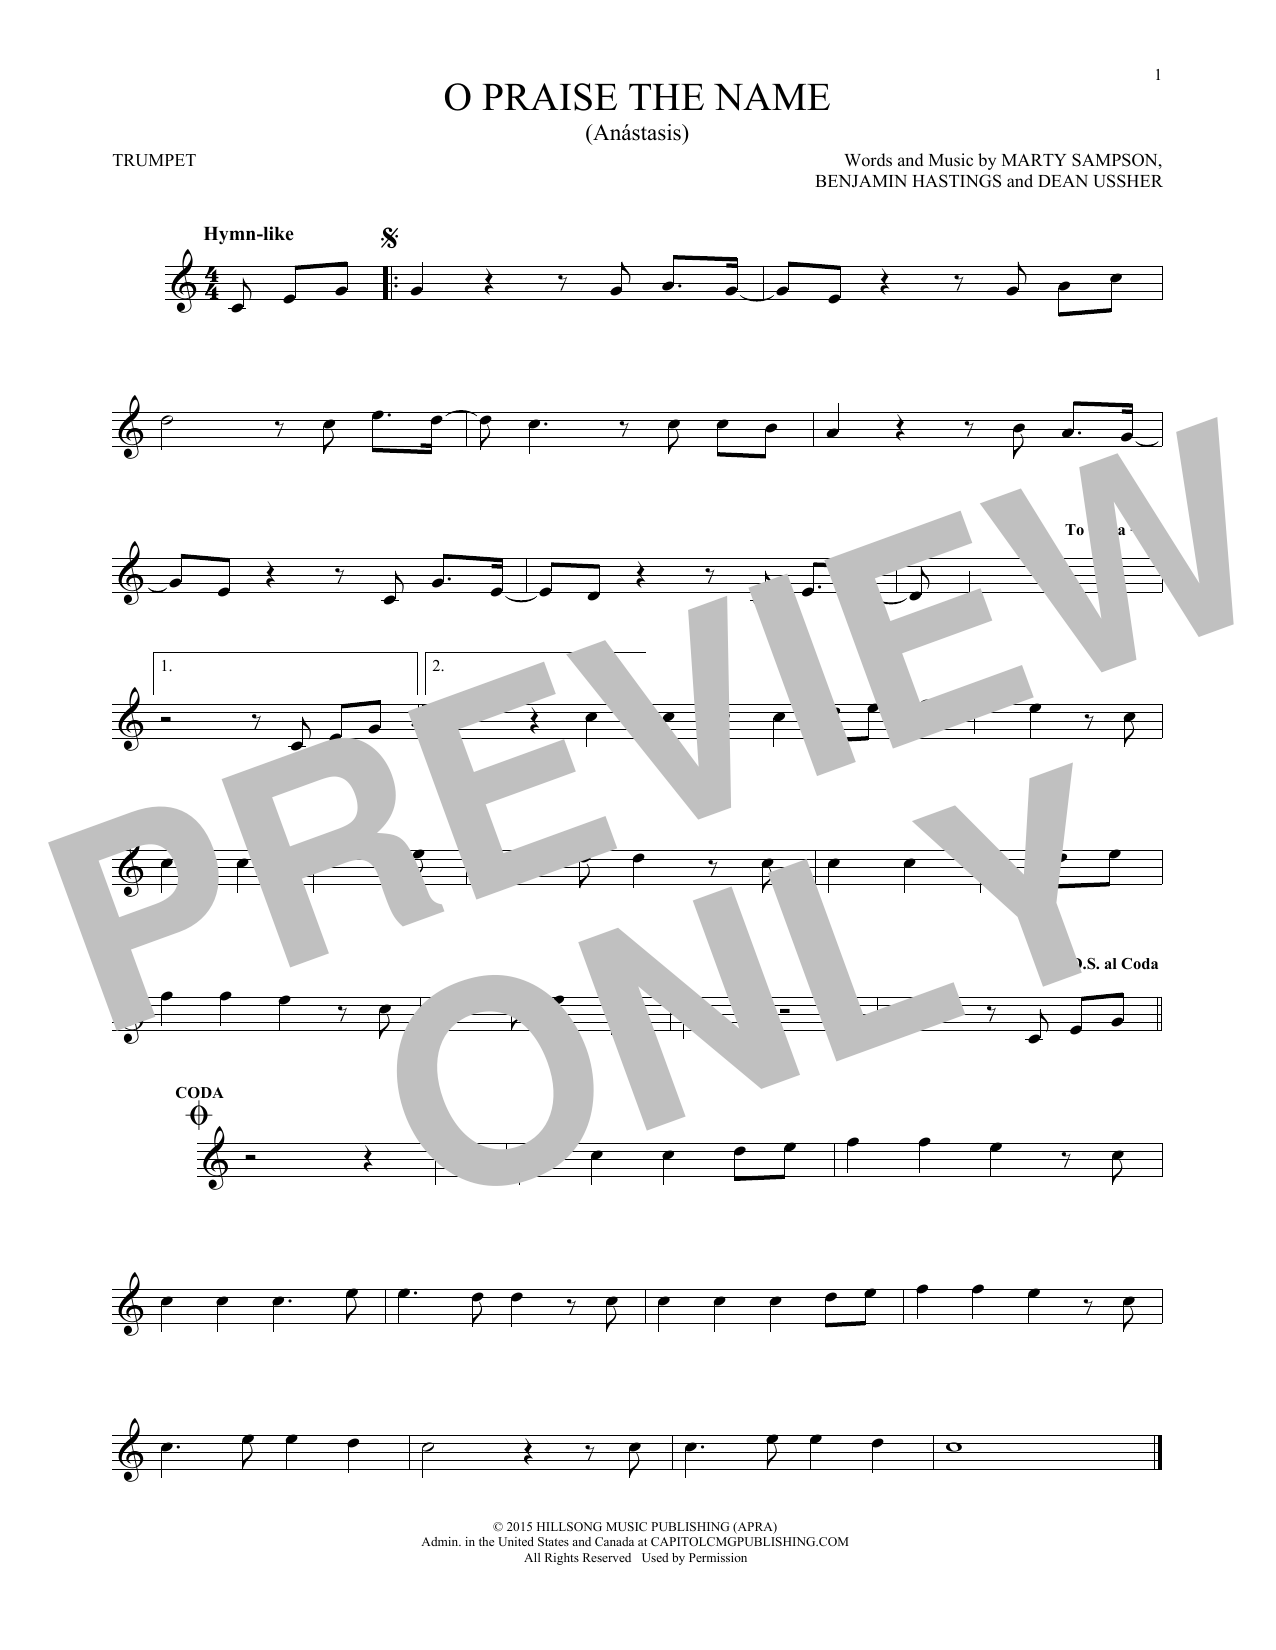 Hillsong Worship O Praise The Name (Anastasis) Sheet Music Notes & Chords for Easy Piano - Download or Print PDF